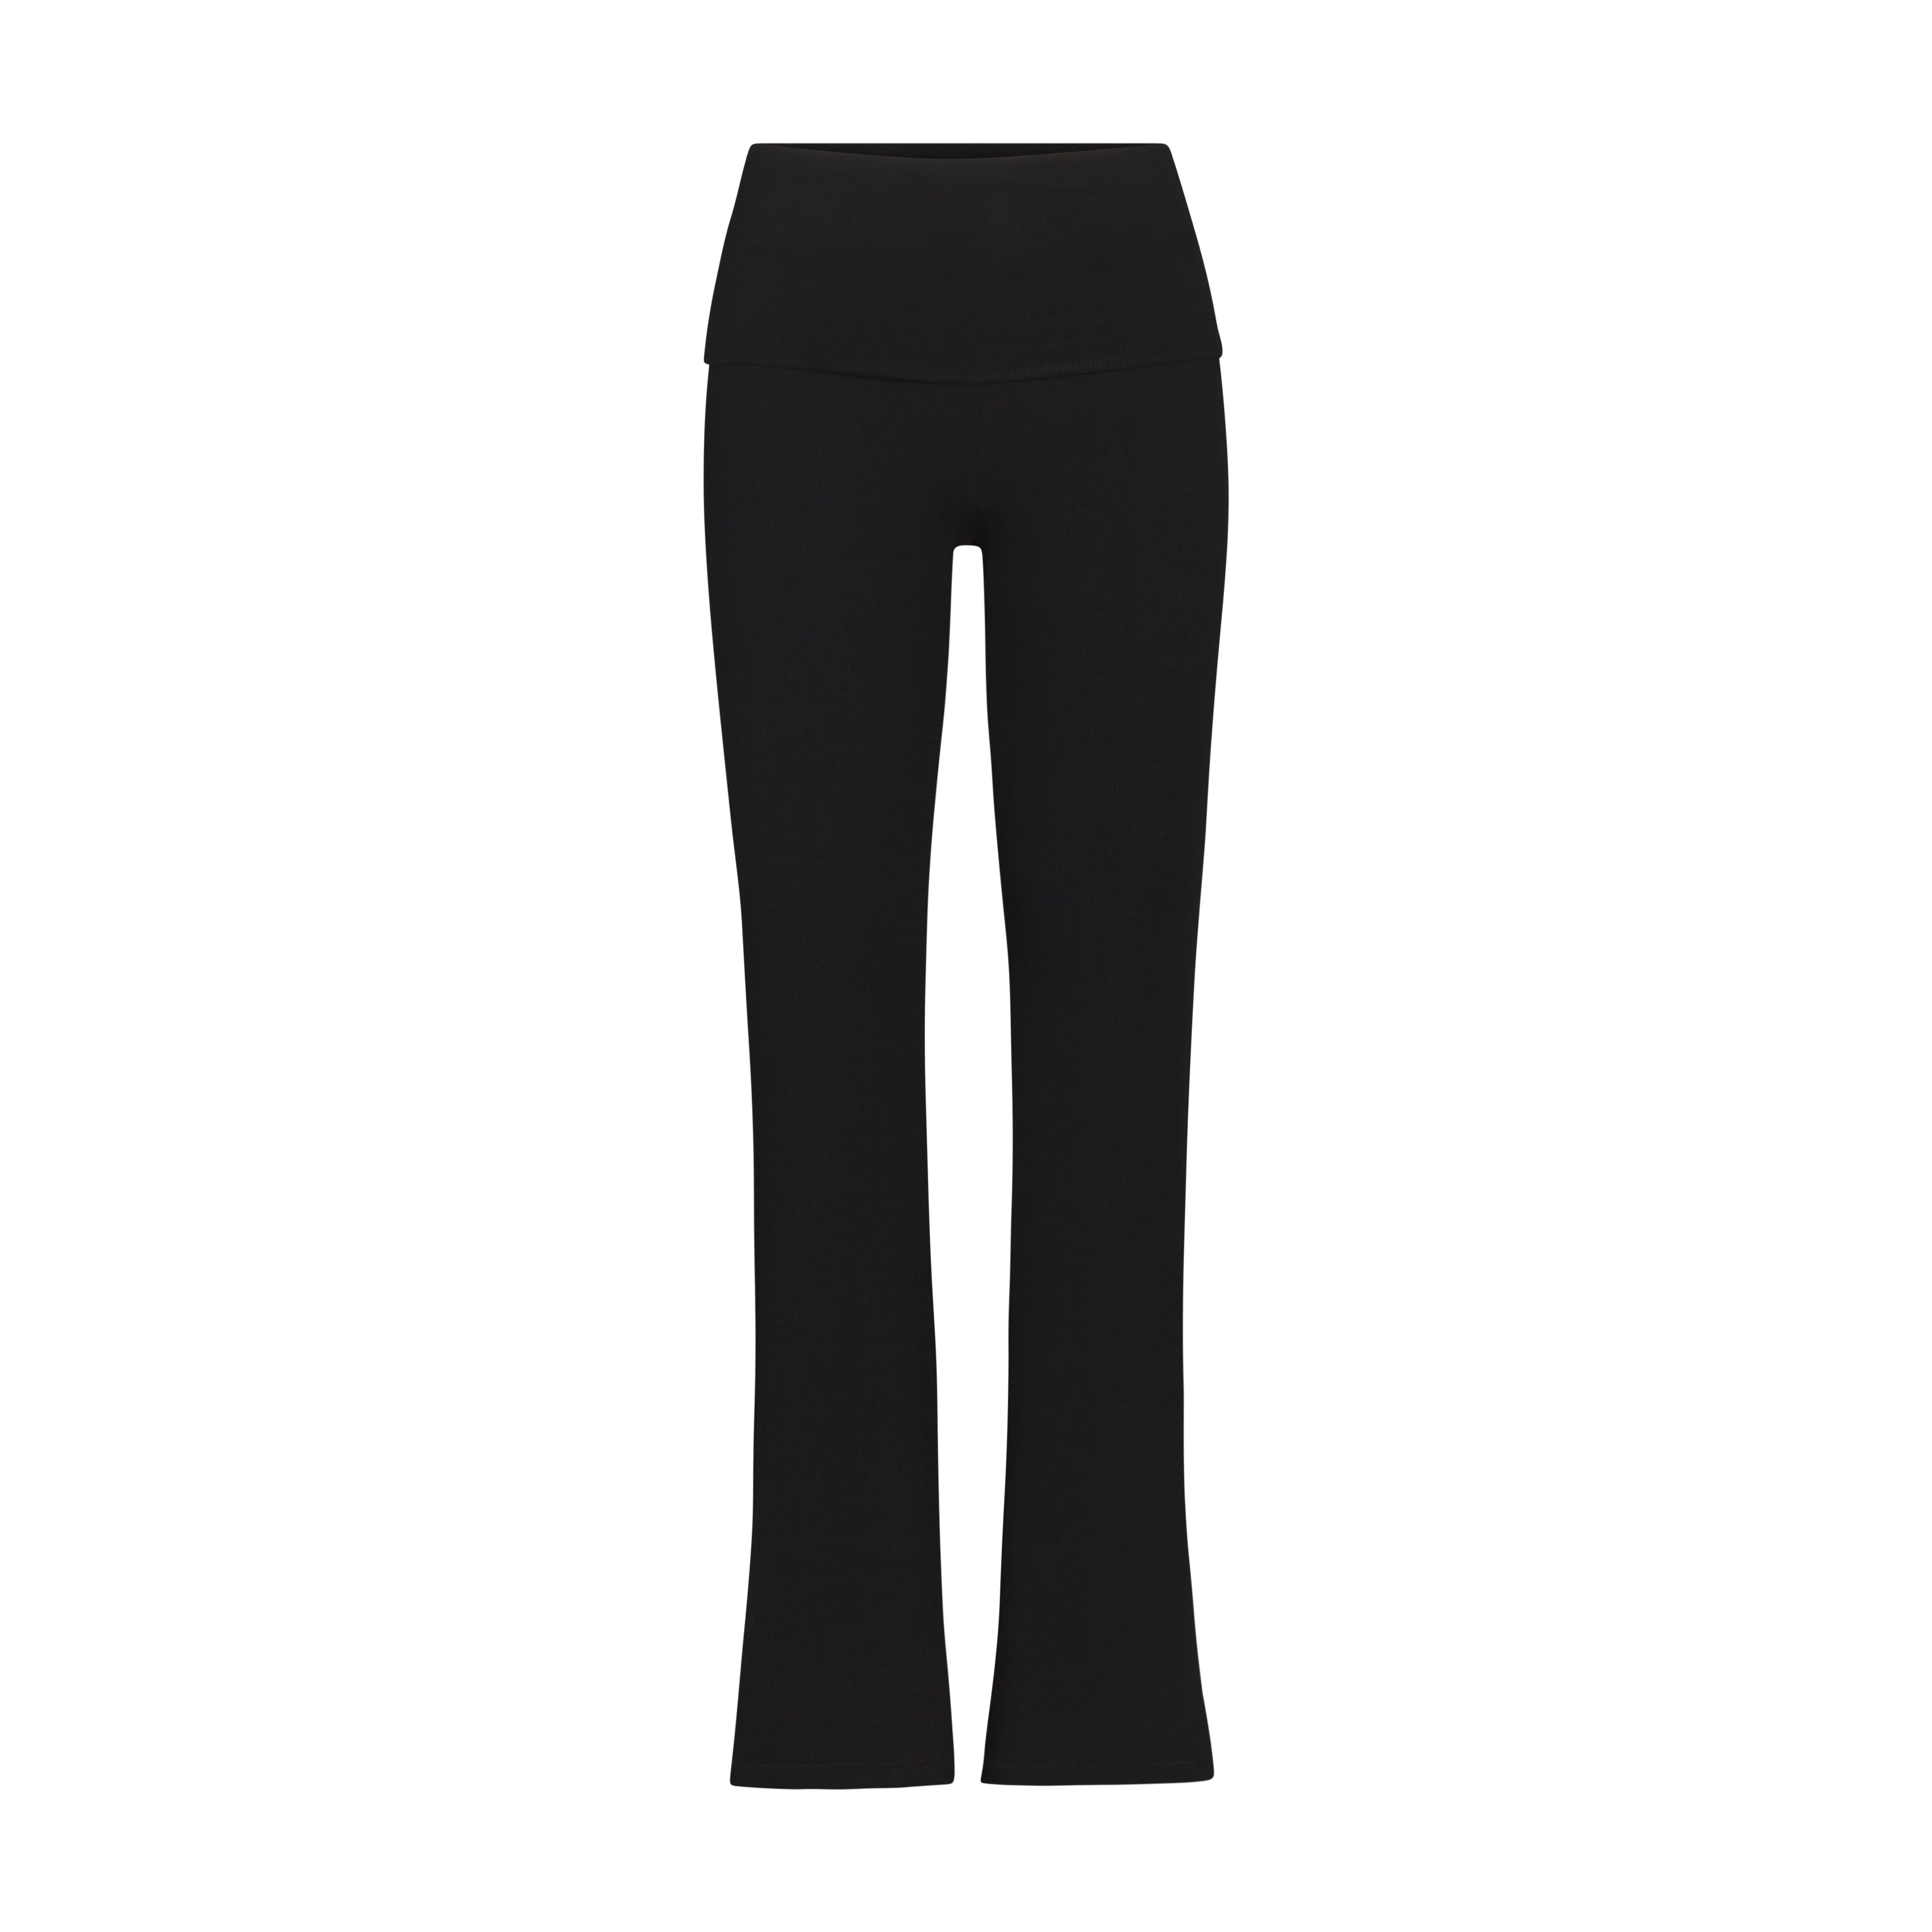 Grey Fold Over Yoga Pants - Yoga Pants - AliExpress